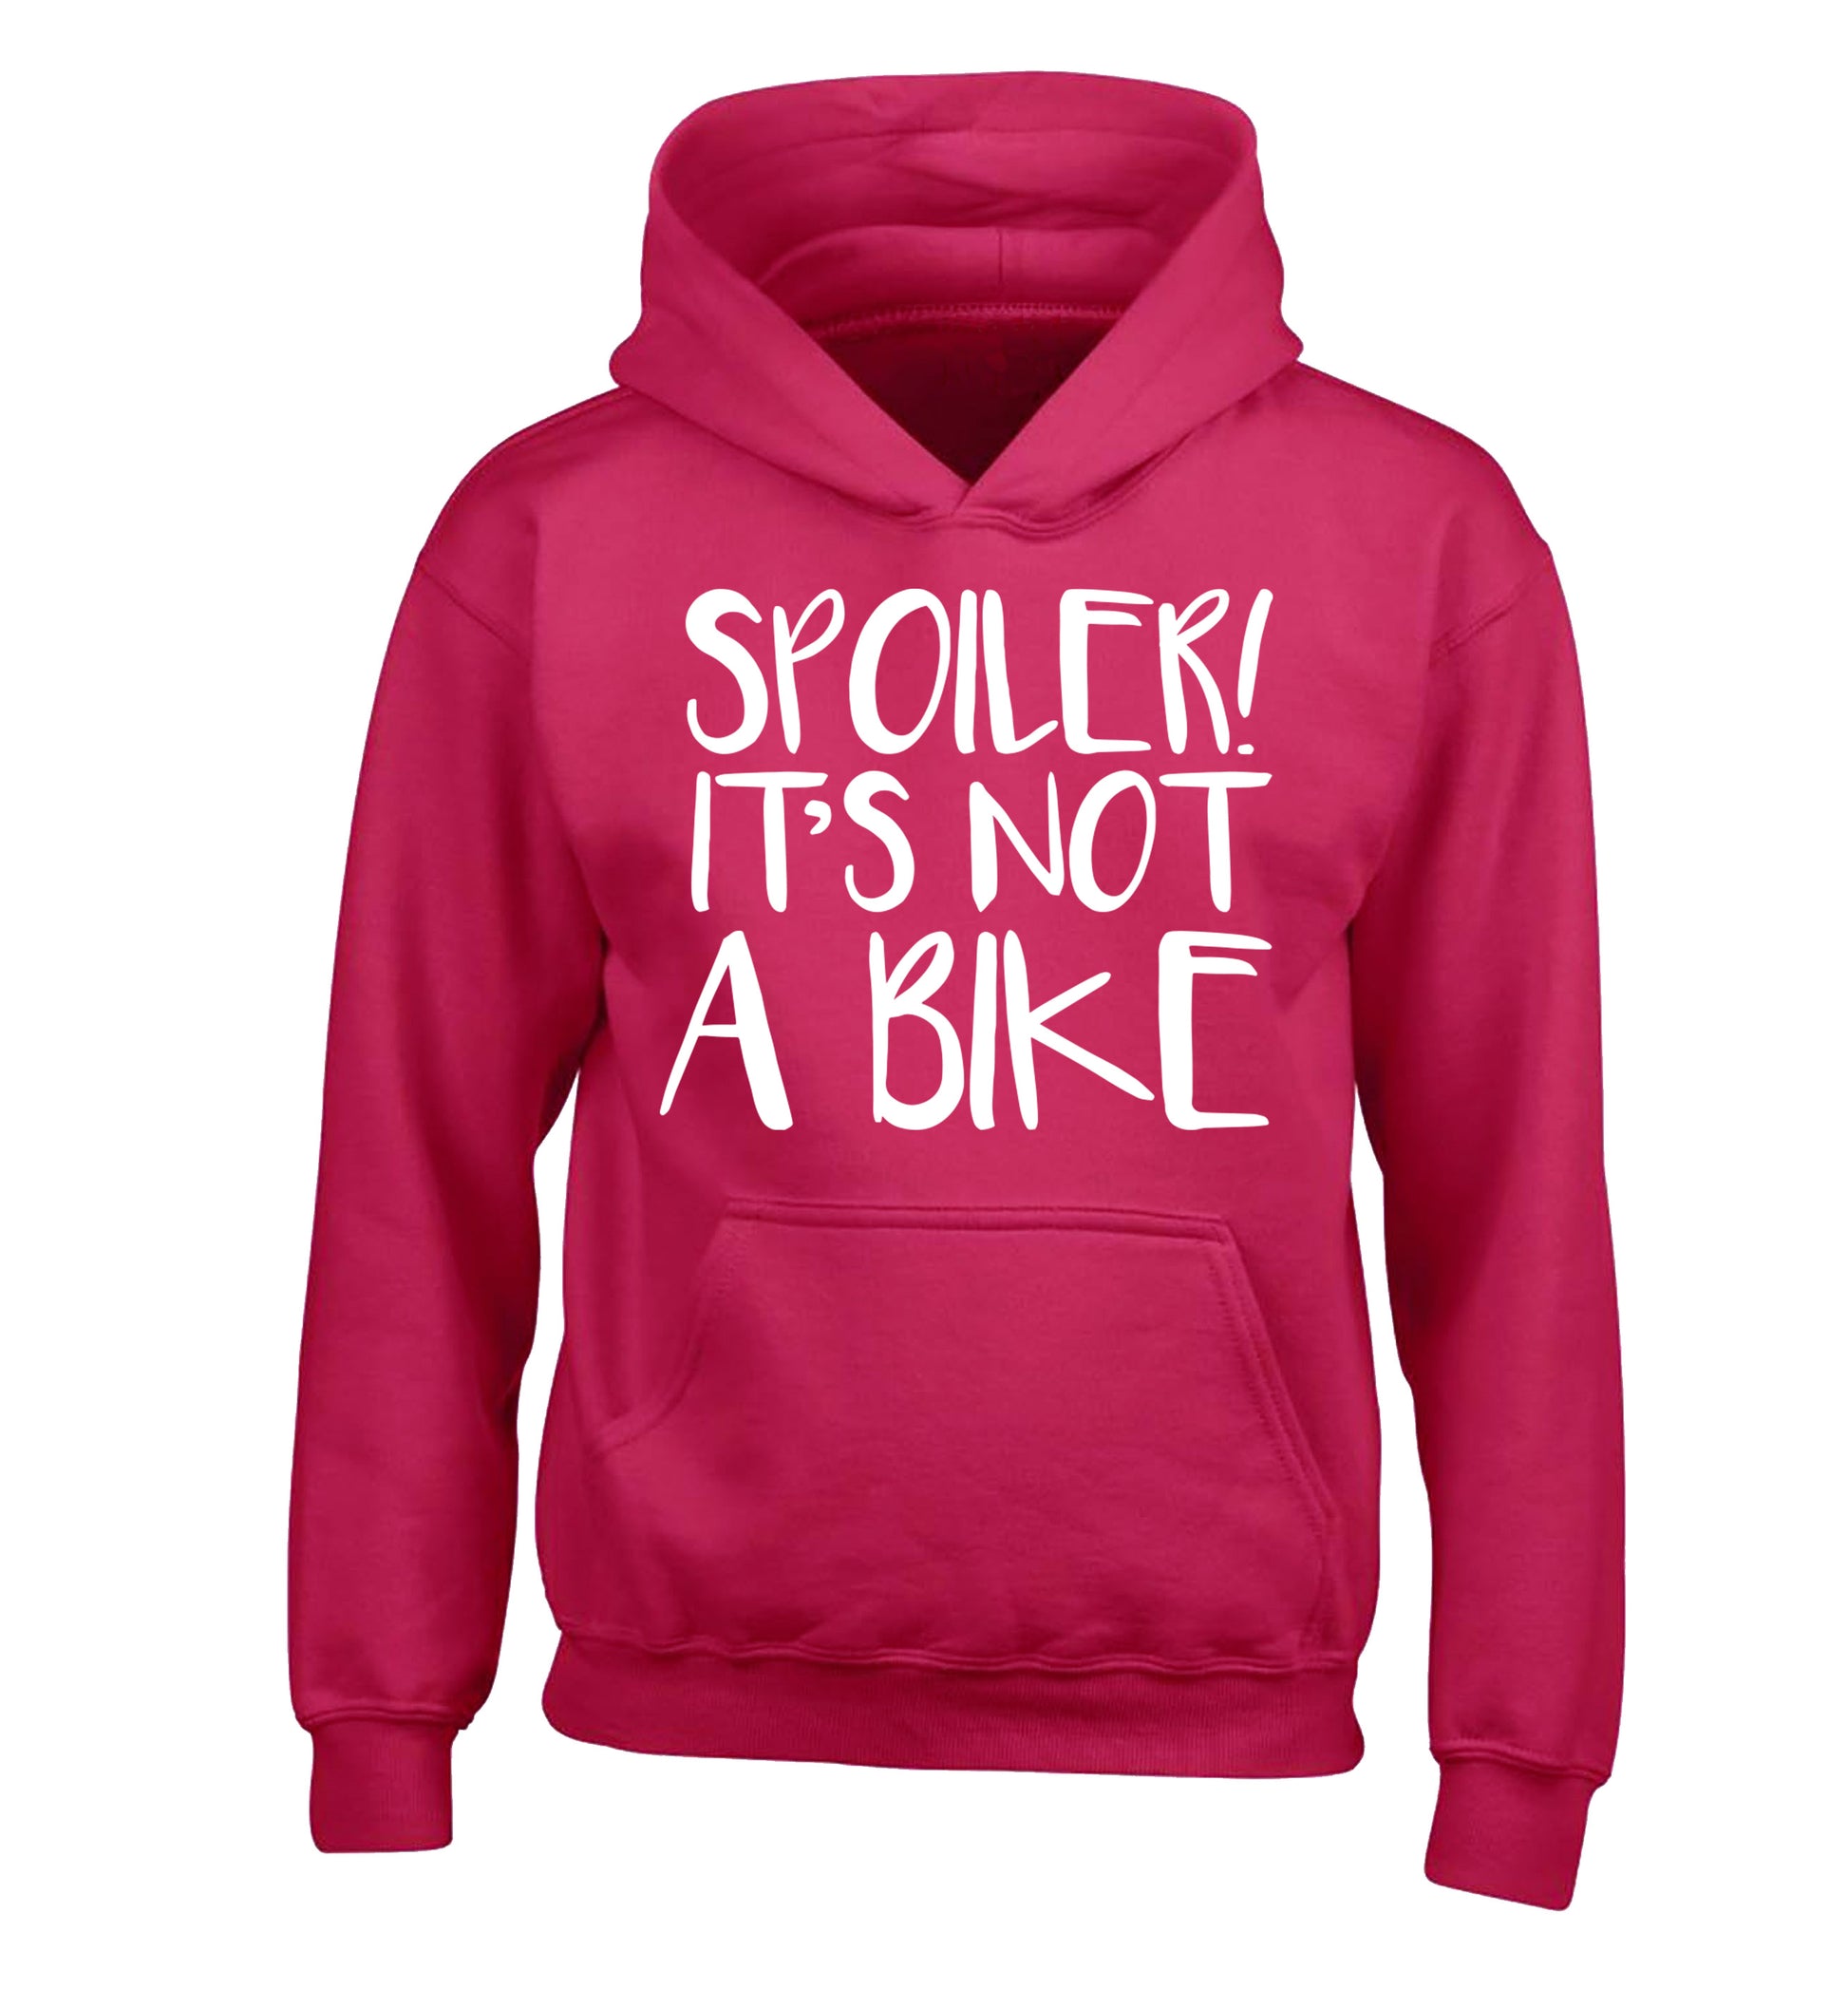 Spoiler it's not a bike children's pink hoodie 12-13 Years